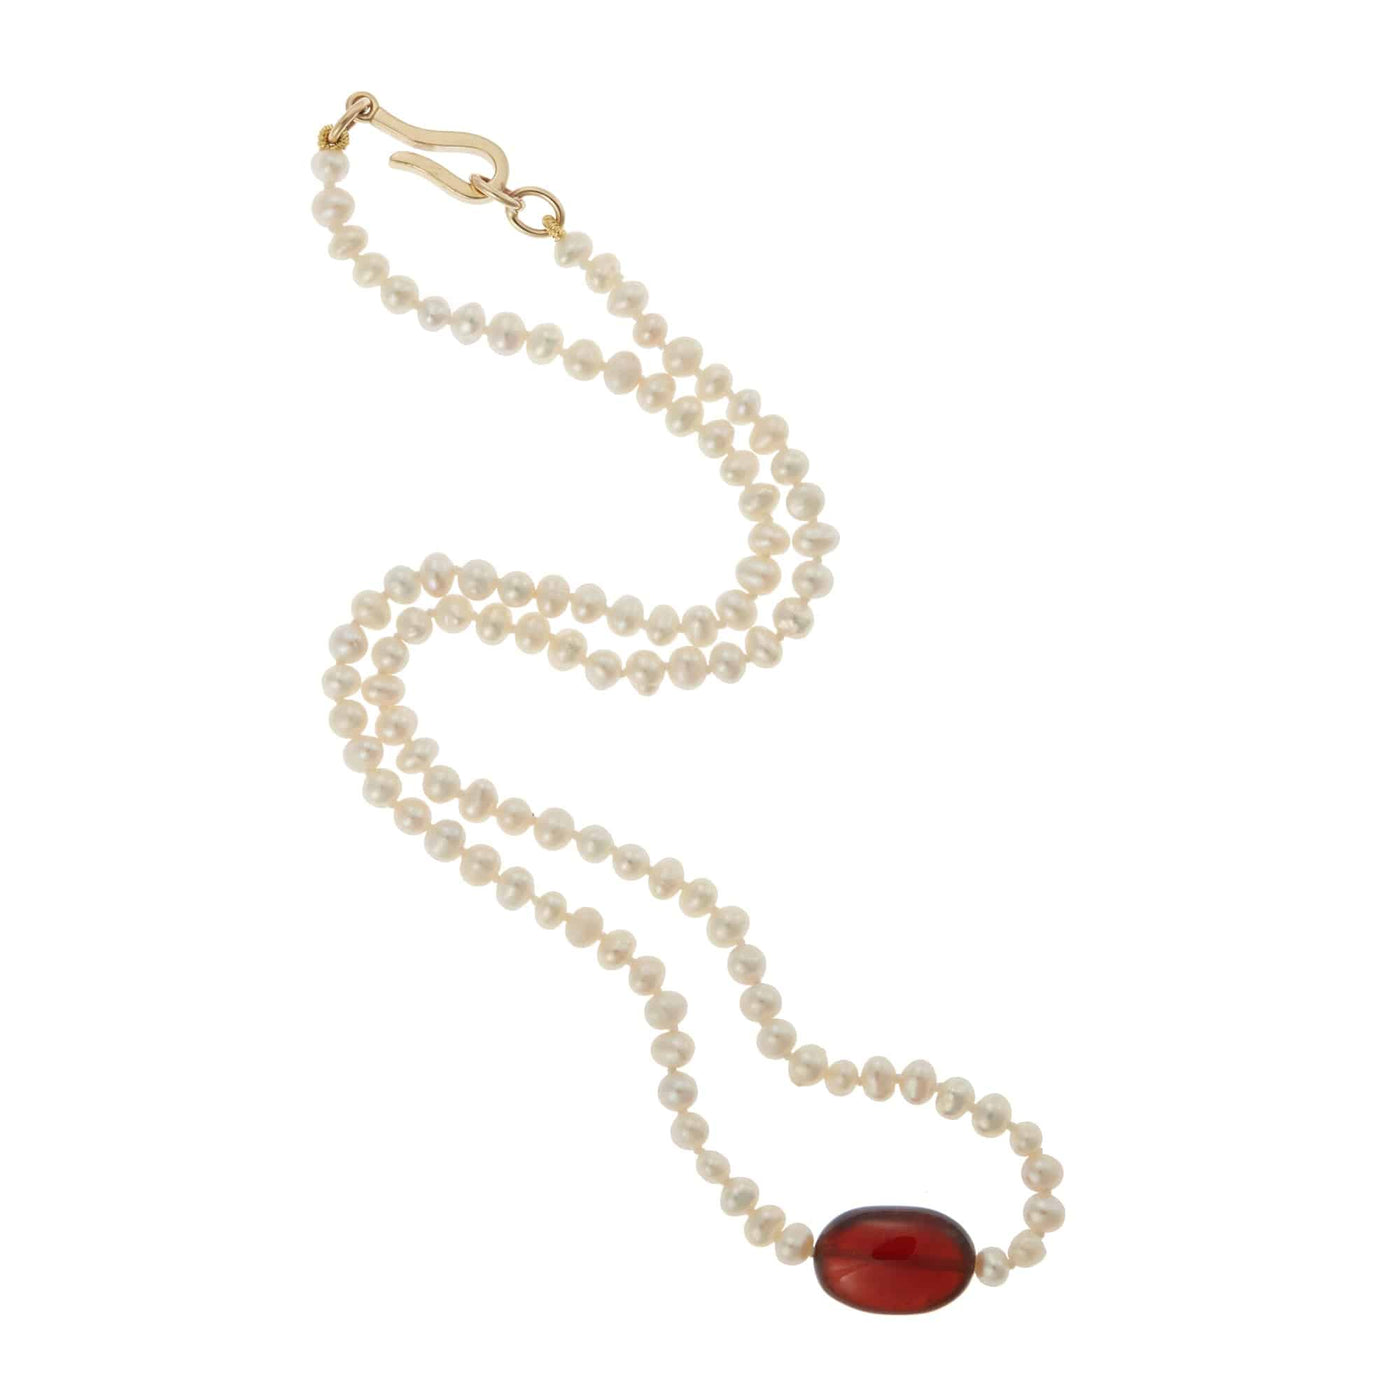 Hessonite Pearl Necklace (45cm) - Globetrotter - Ileana Makri store